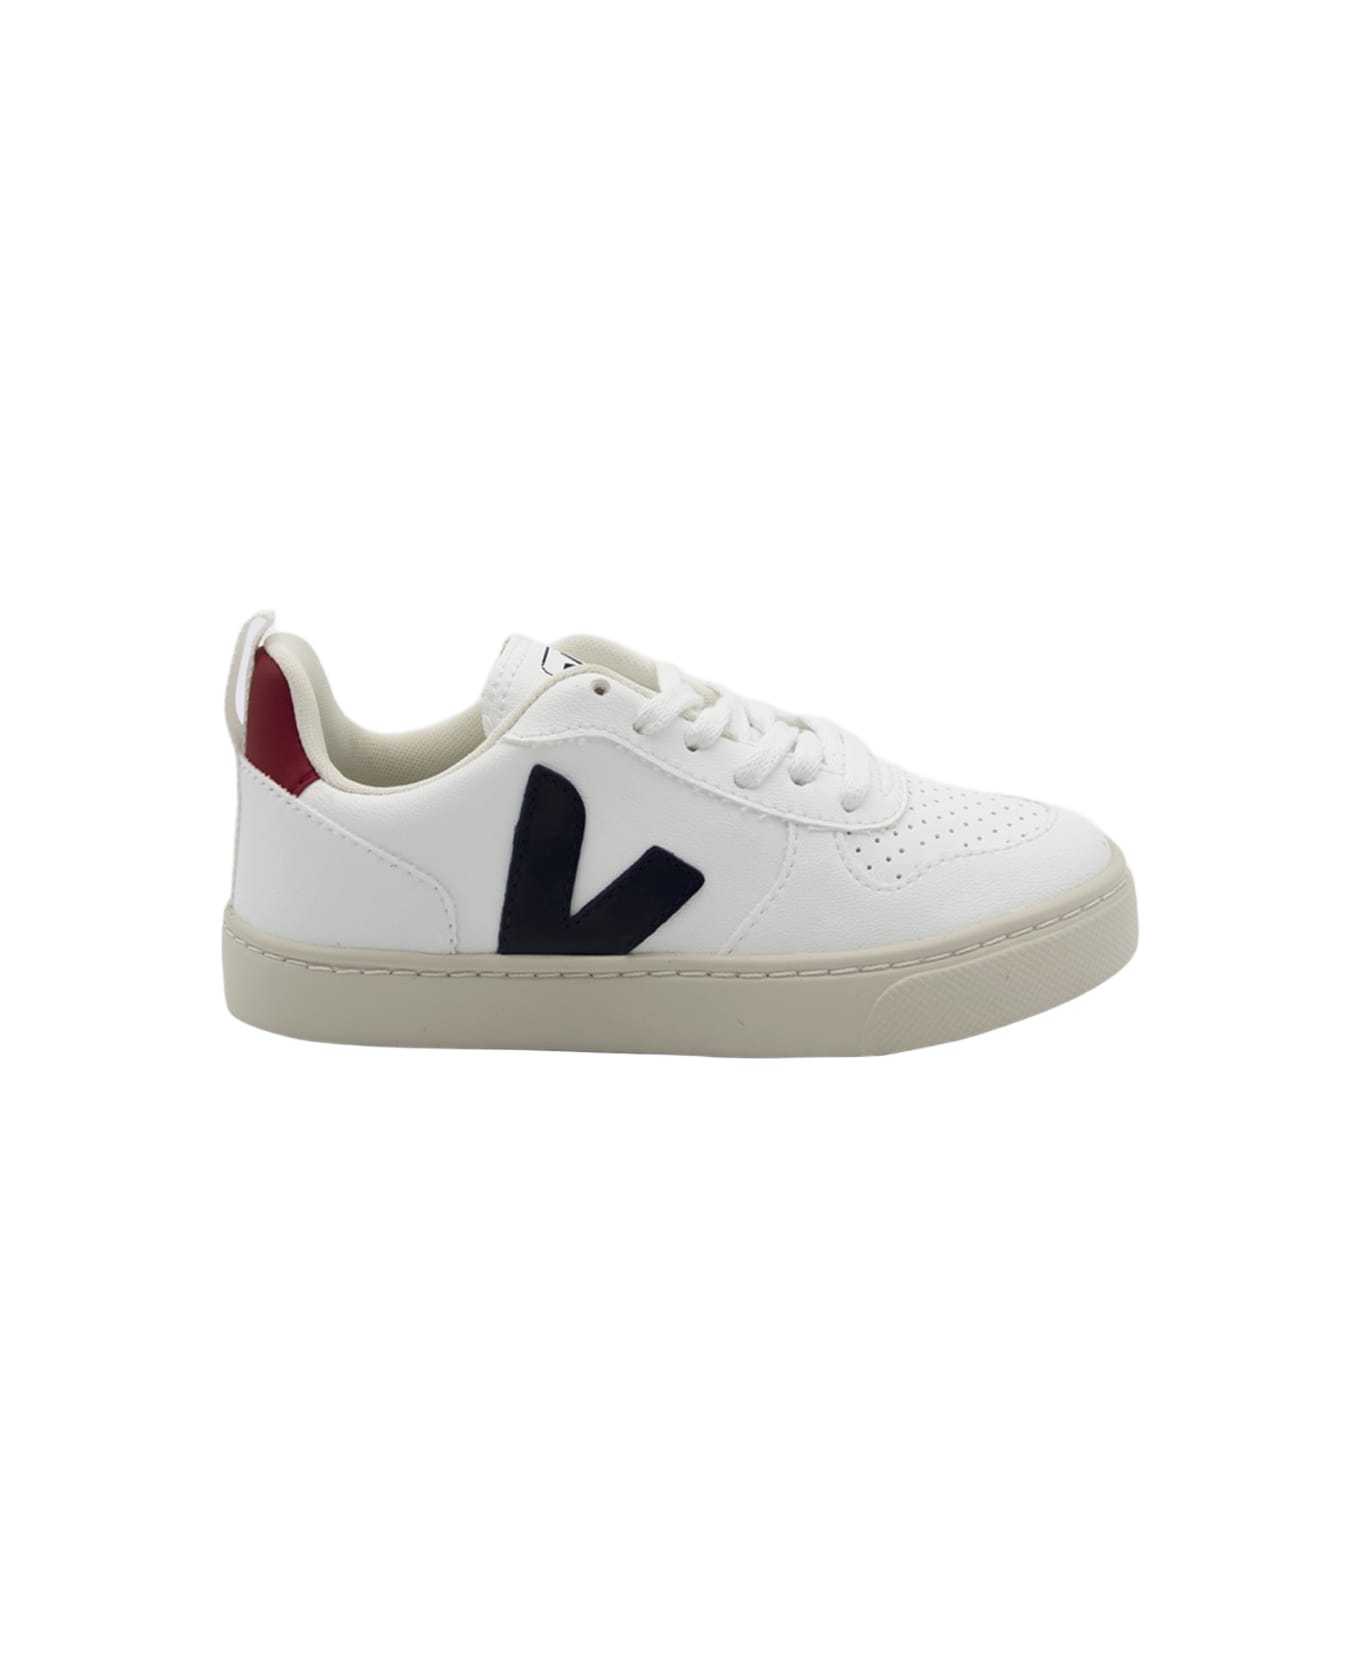 Veja White And Red Leather Esplar Sneakers - WHITE/COBALT PEKIN